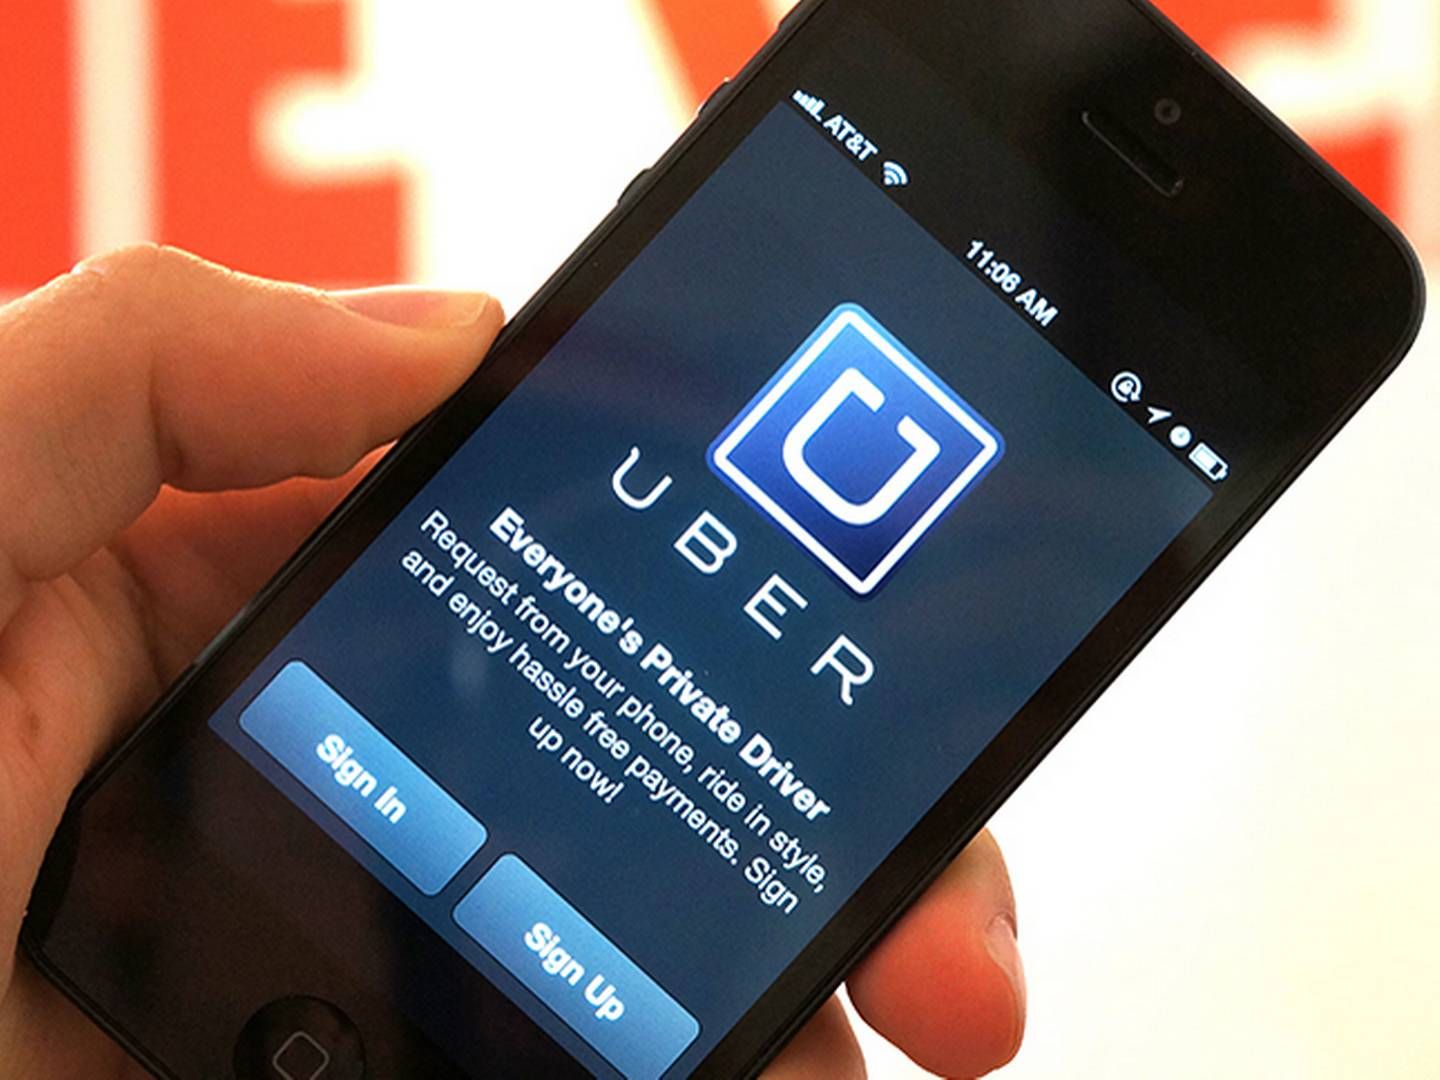 Forsvarer Eddie Omar Rosenberg Khawaja har anket Uber-sagen til Højestret.